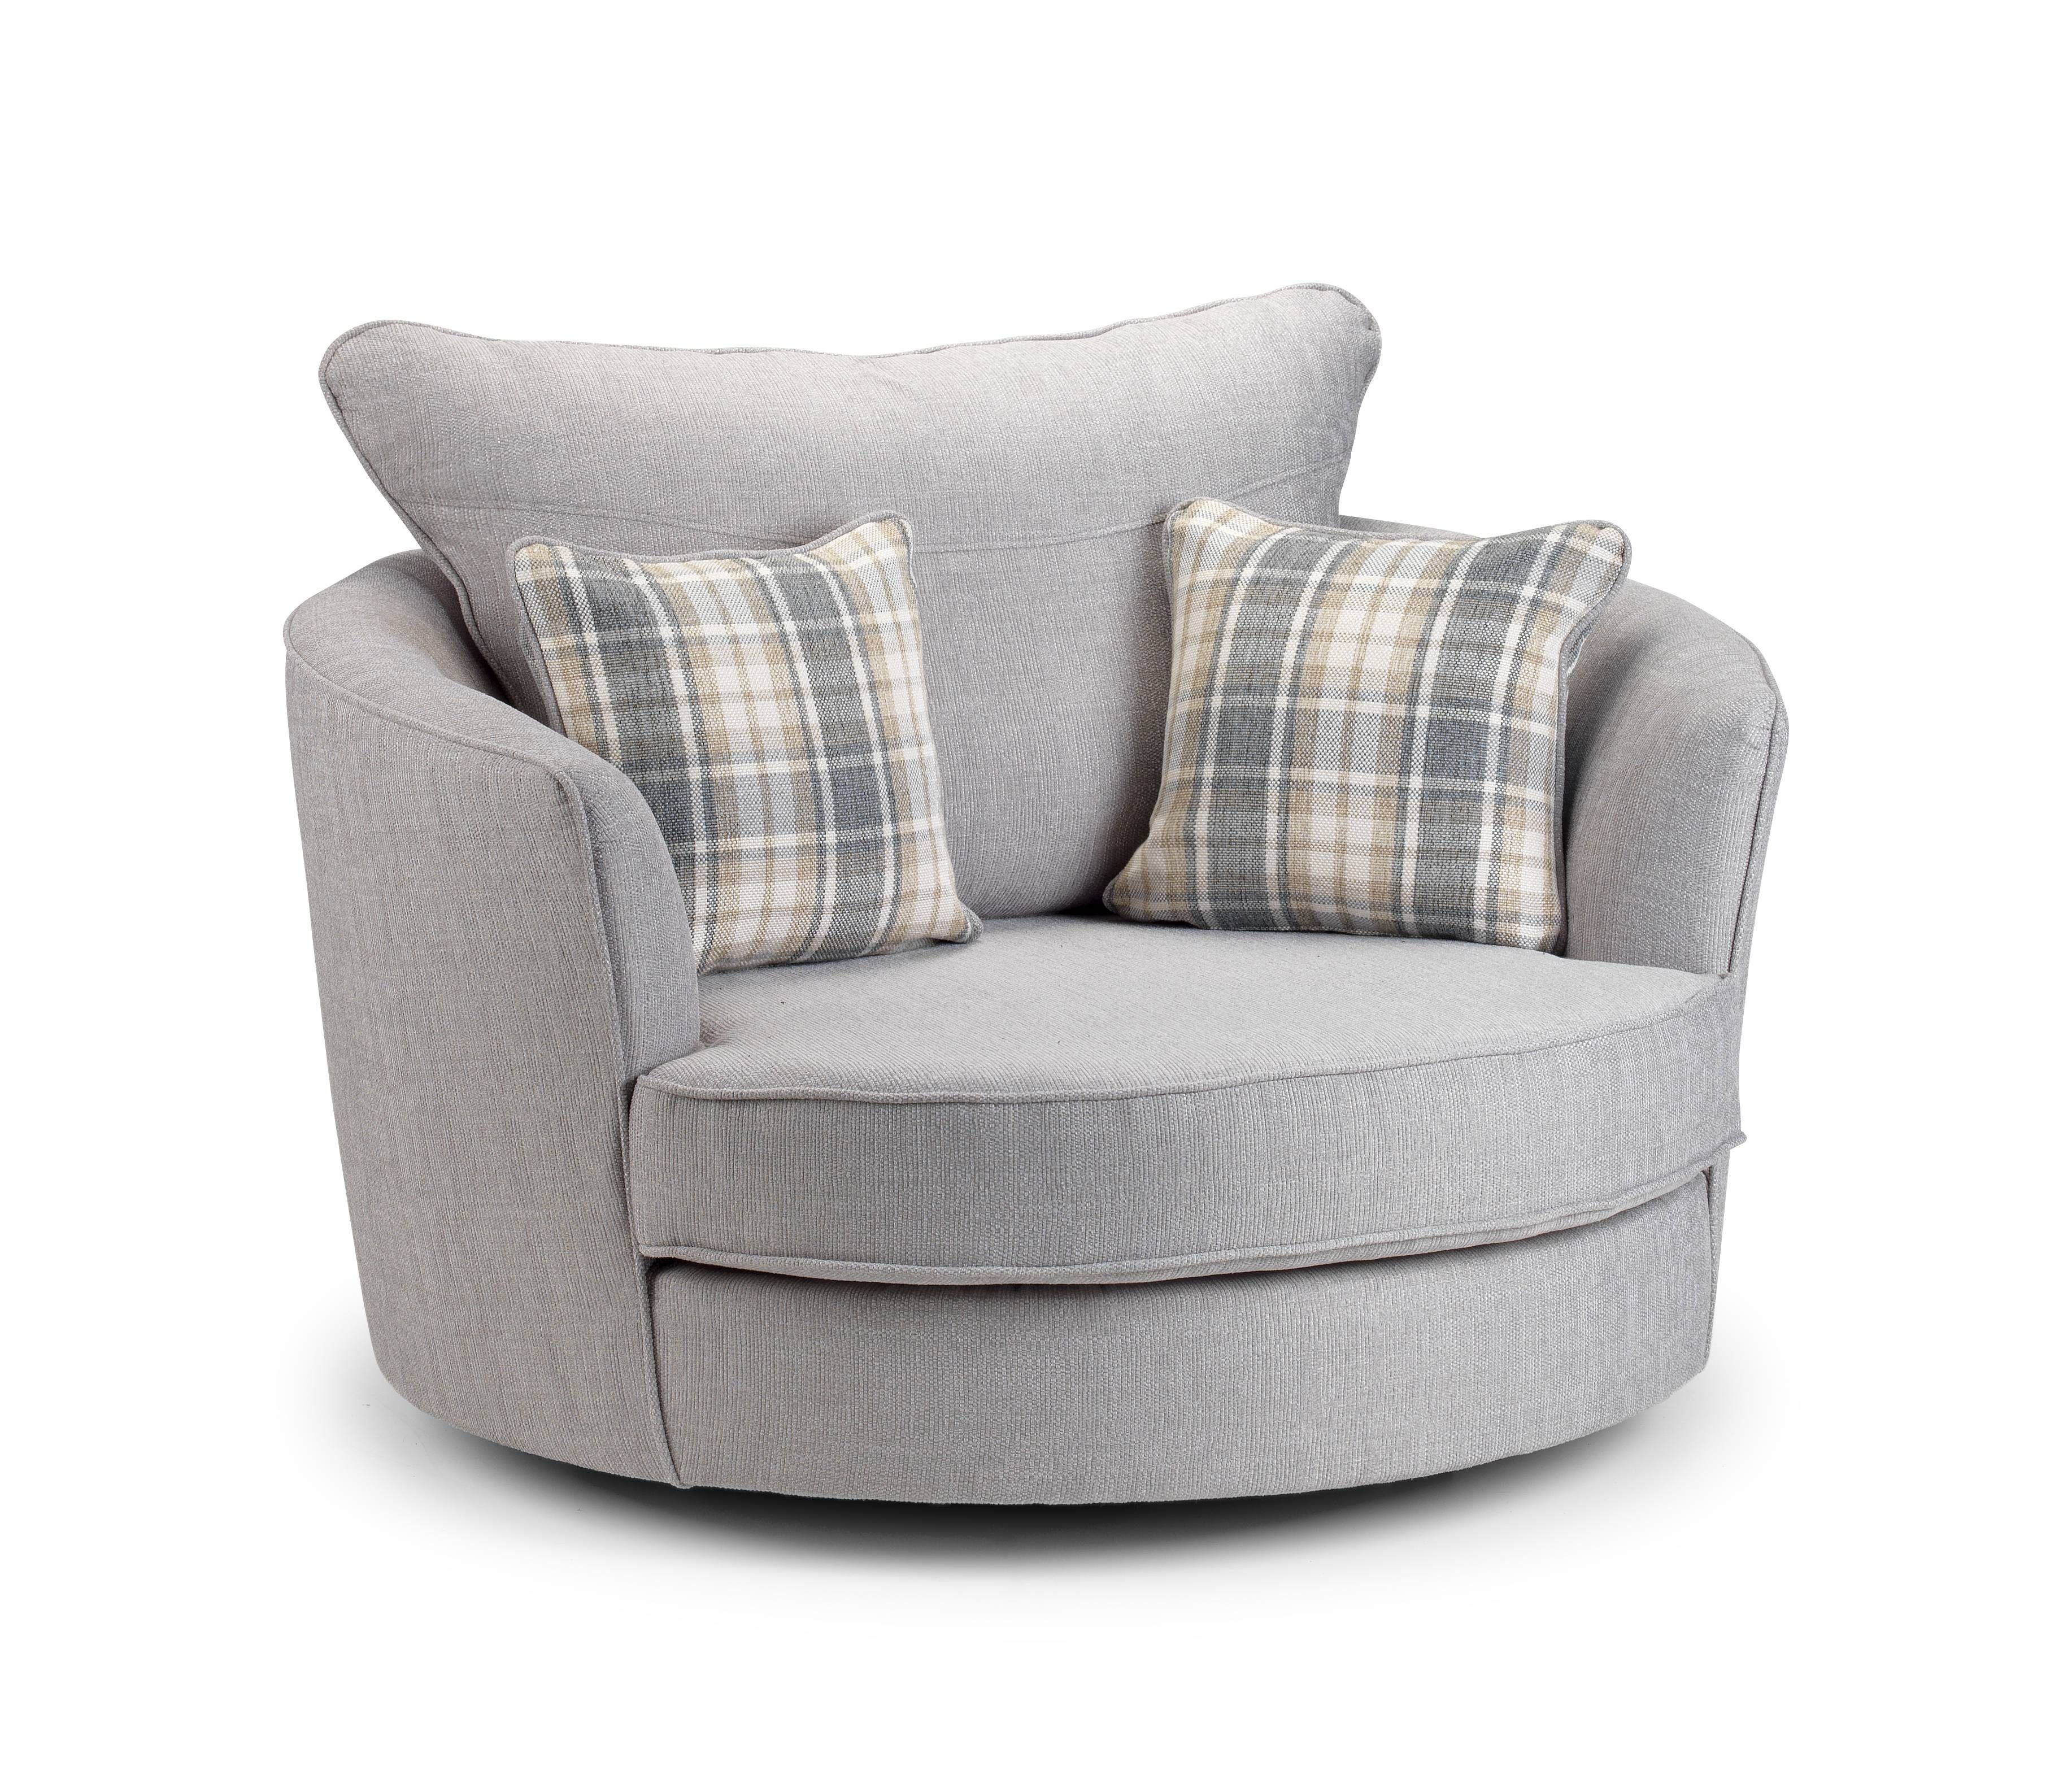 Sofas Center : Shocking Round Sofa Chair Picture Concept Nice Regarding Round Sofas (Photo 27 of 30)